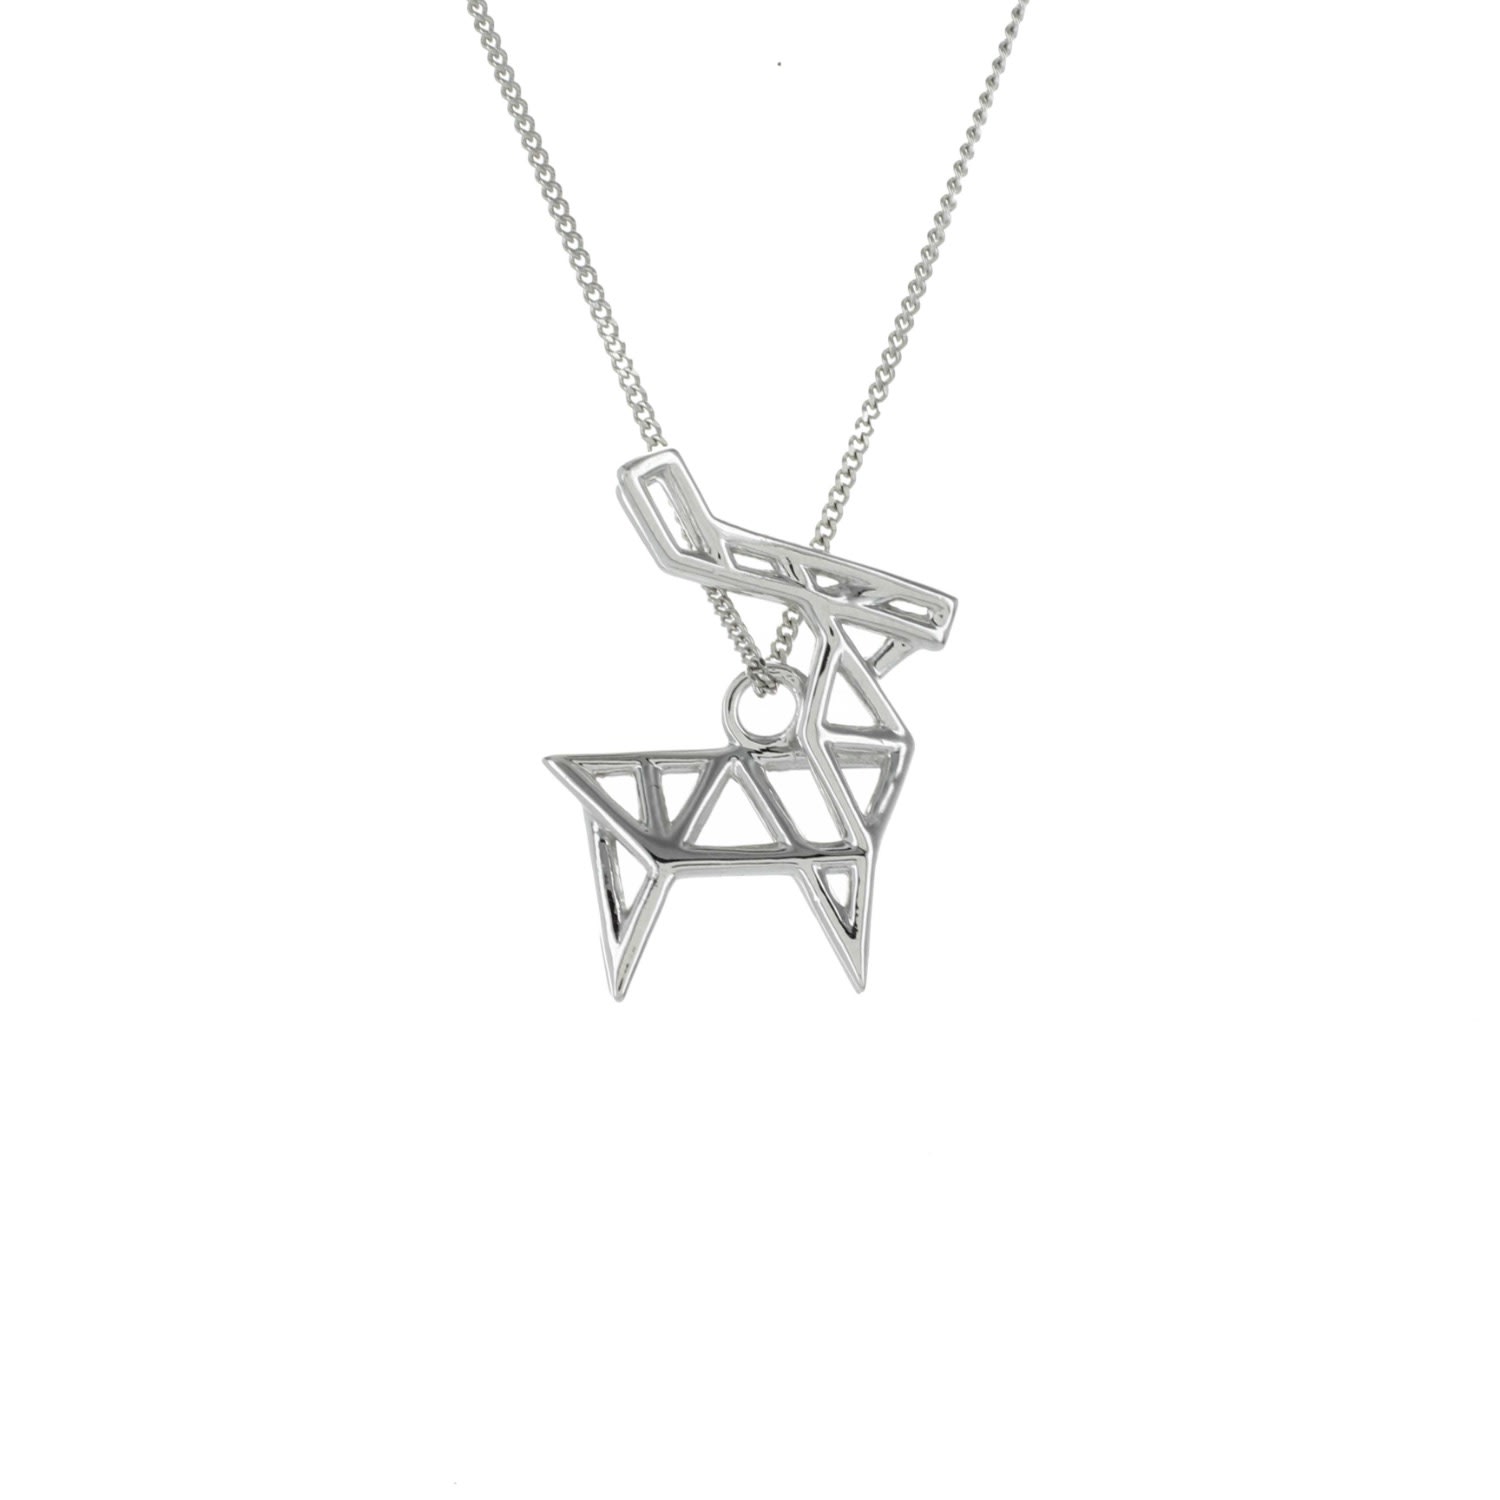 Women’s Frame Deer Necklace Sterling Silver Origami Jewellery